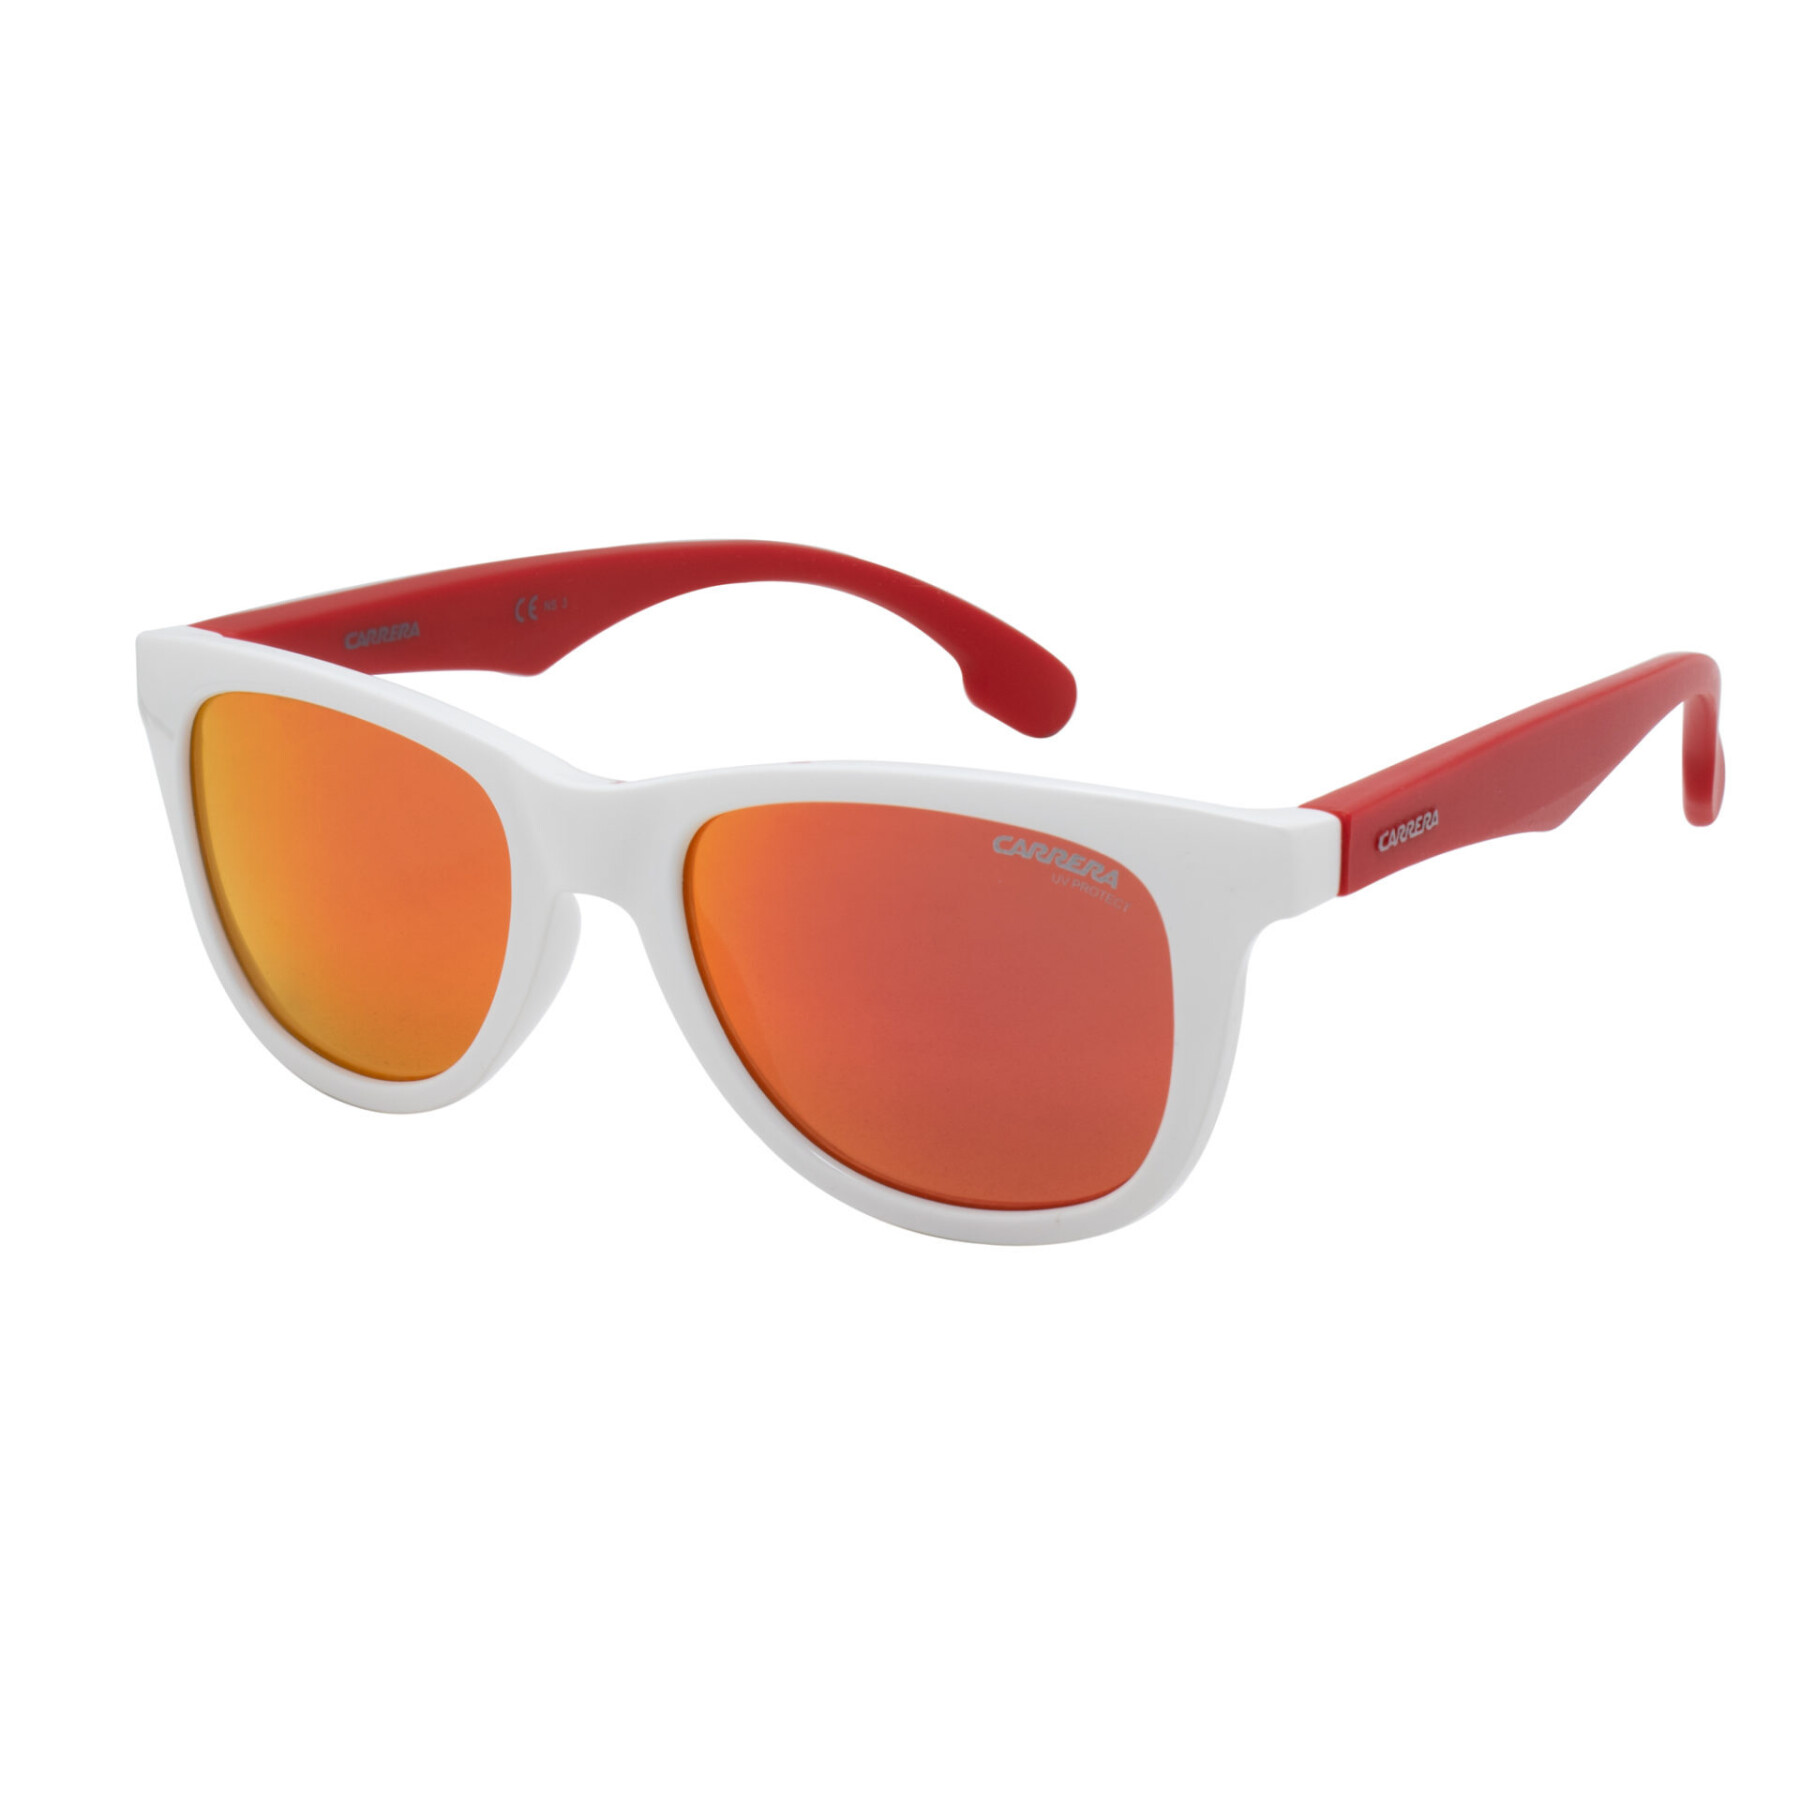 Children's sunglasses Carrera 20-5SK46UZ